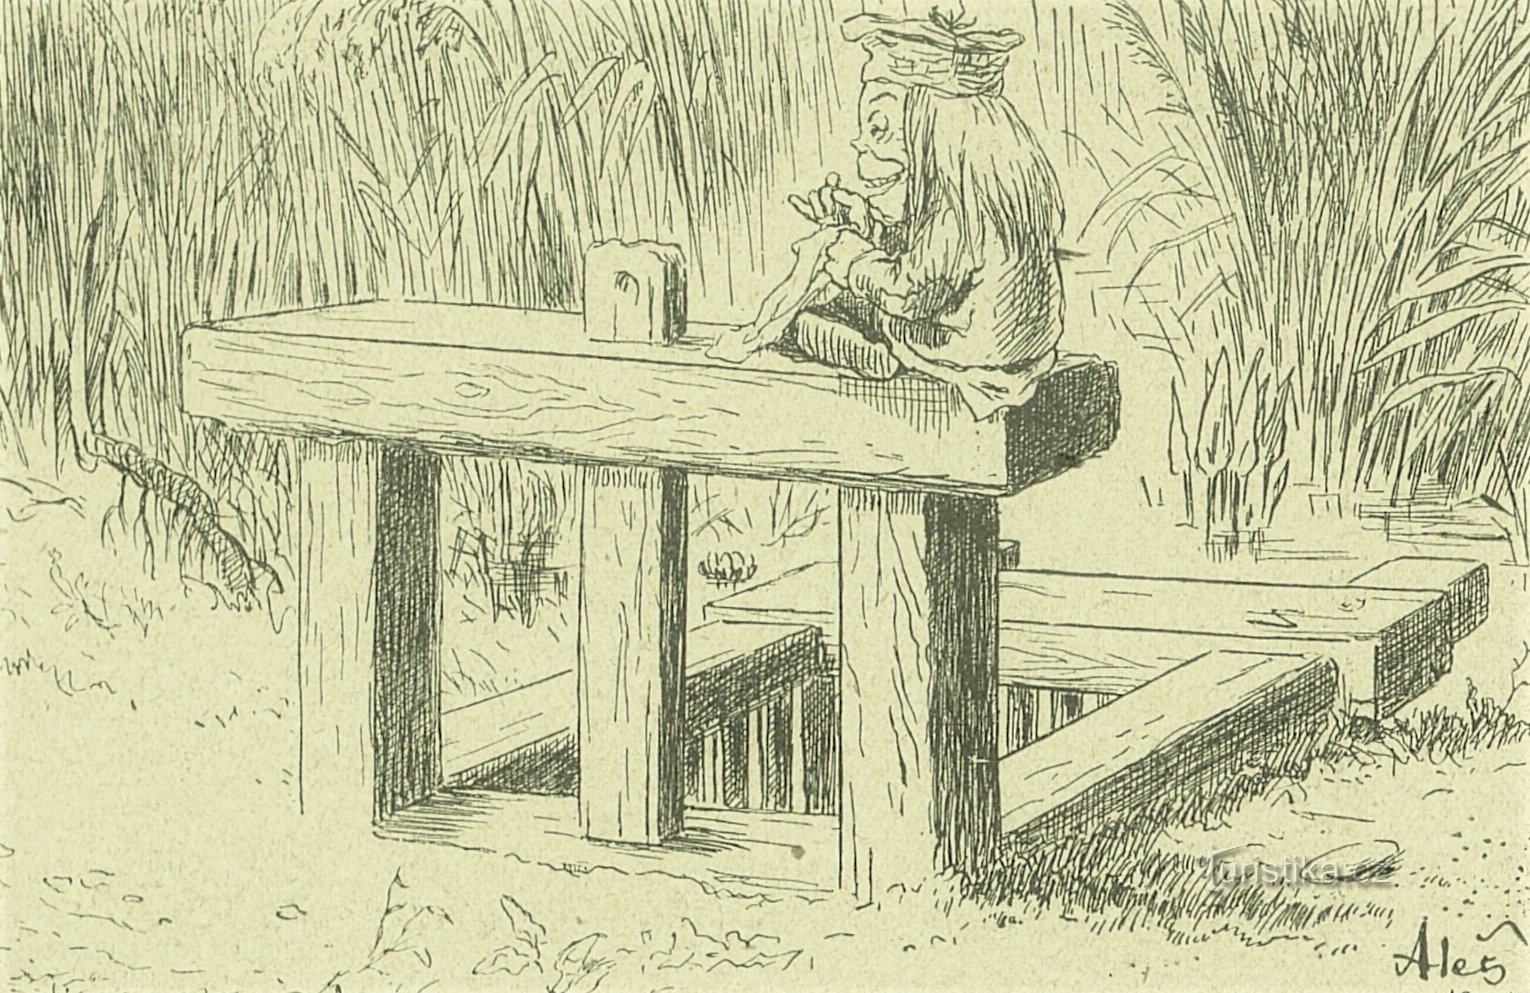 Waterman in Mikoláš Alš's drawing